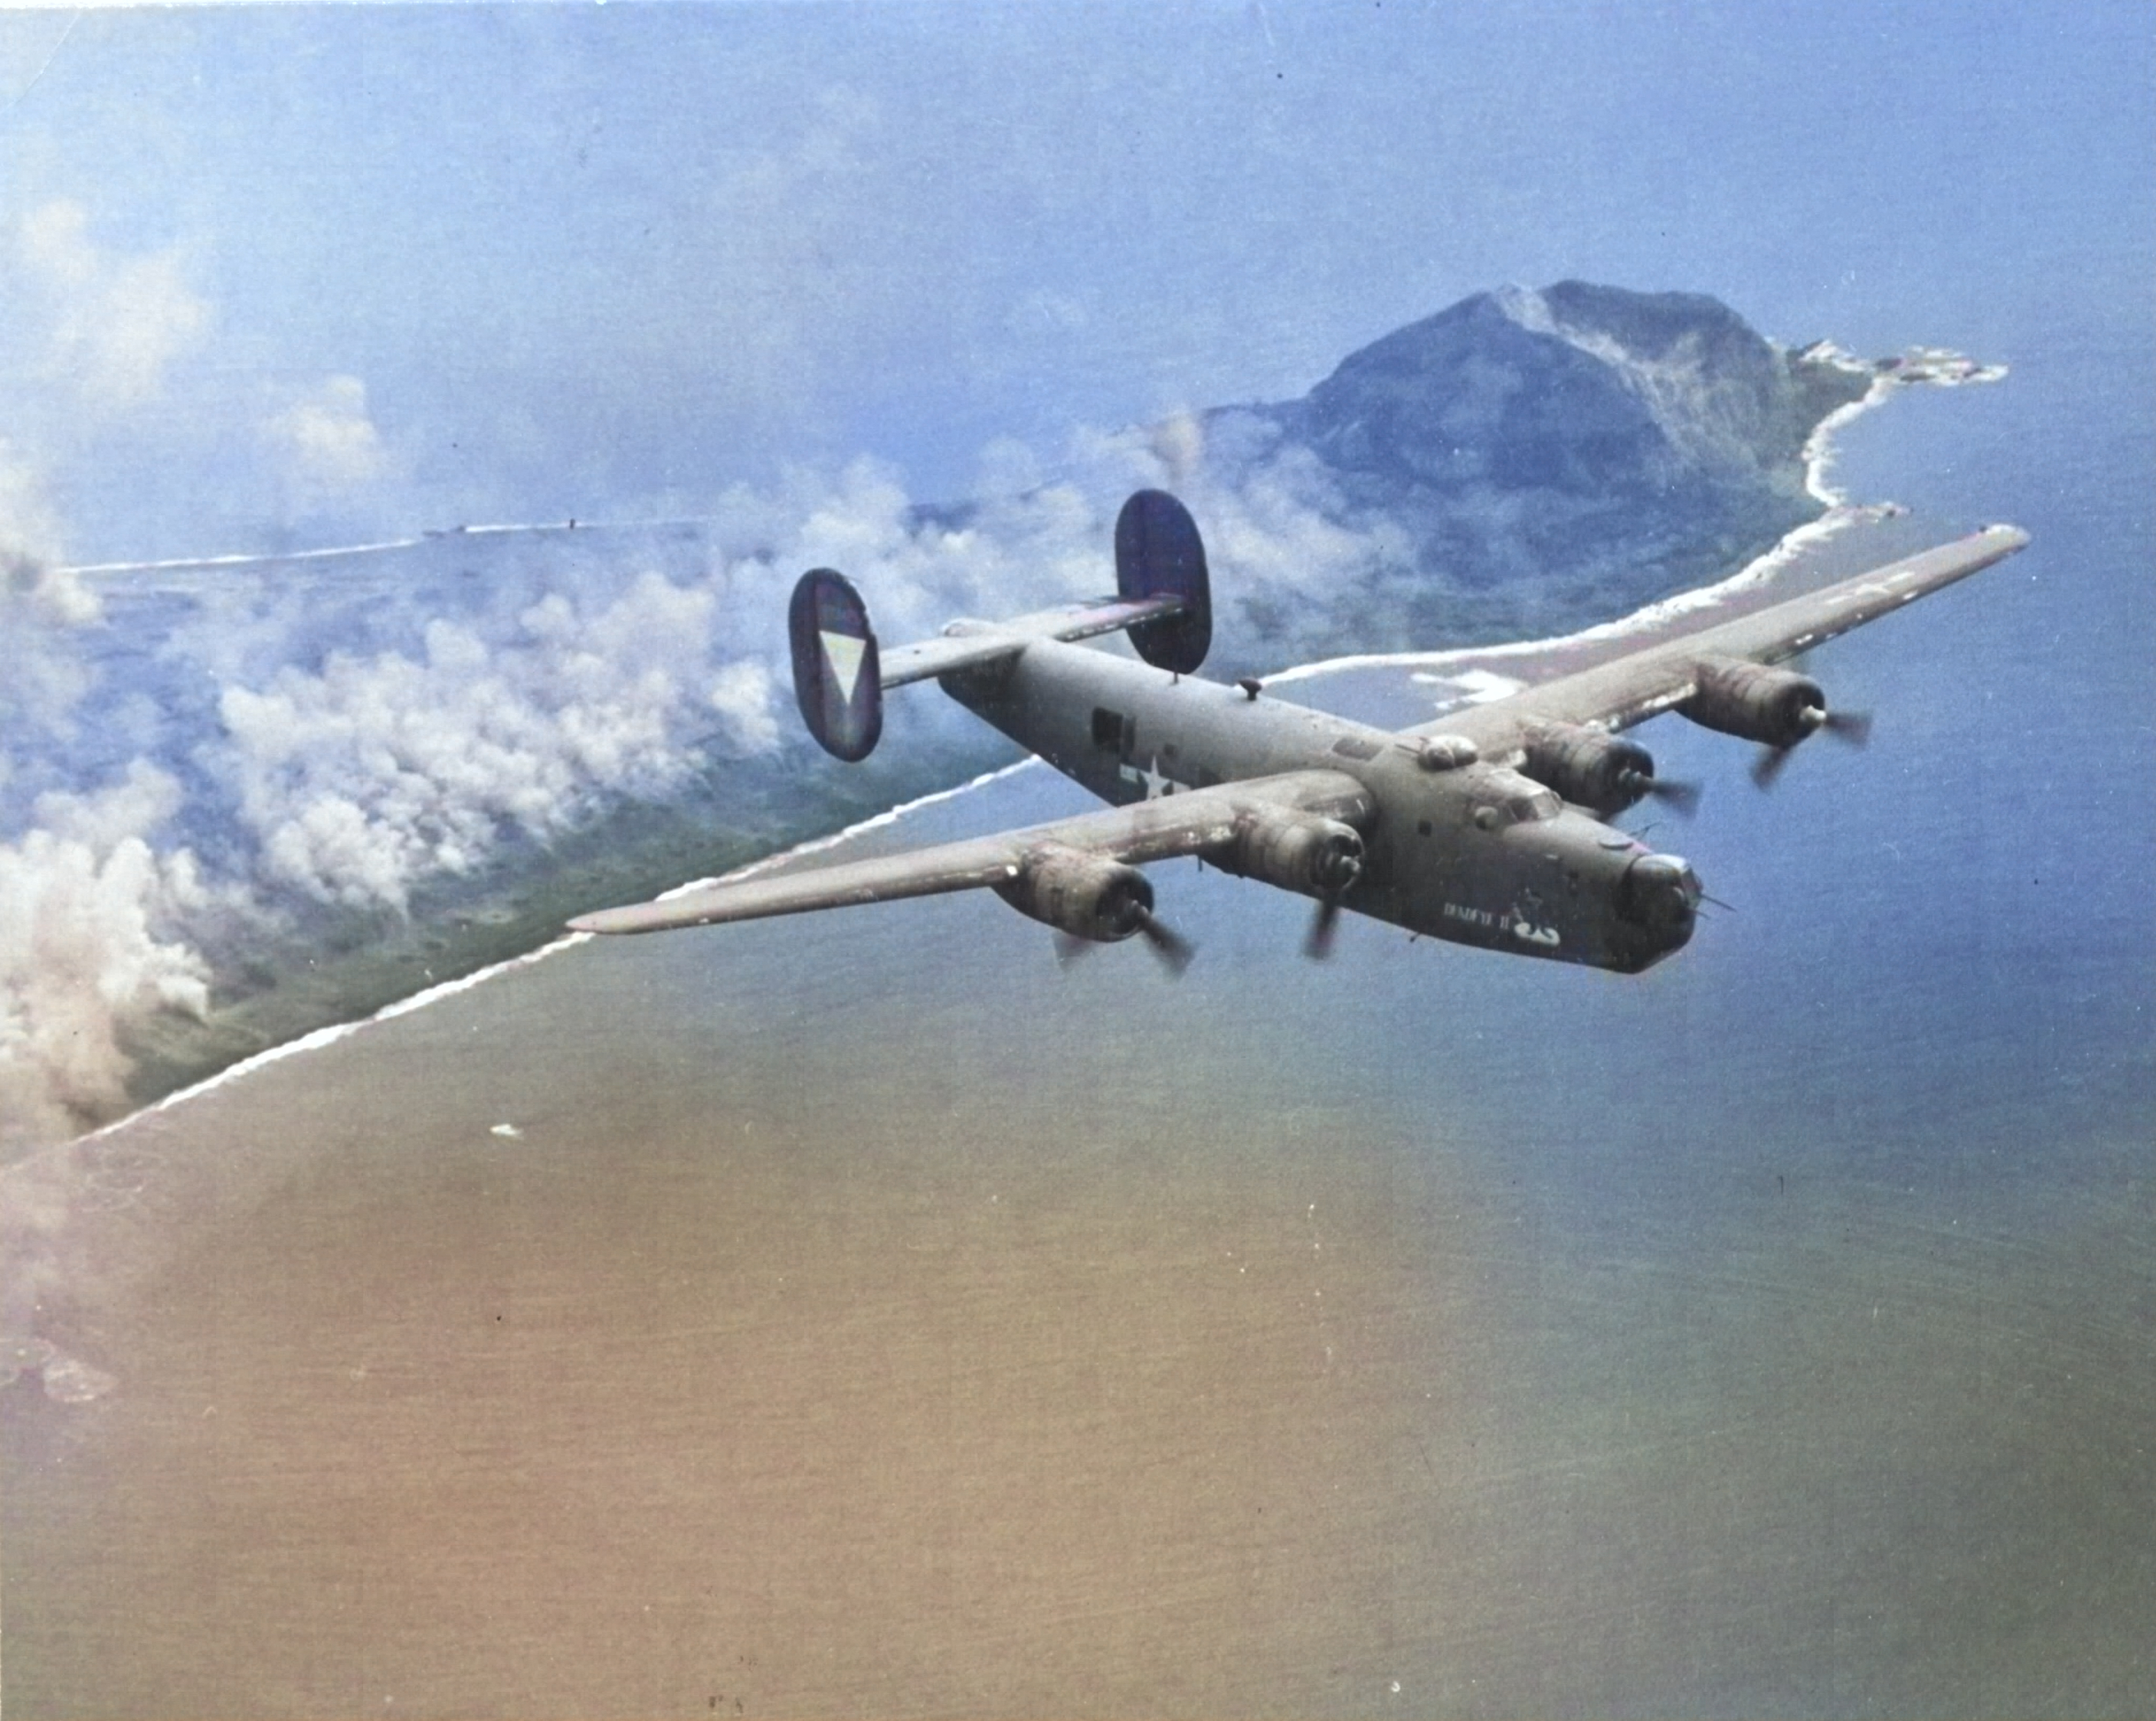 B-24J Liberator “Deadeye II” of the 392nd Bomb Squadron flown by Lt. Warren Myllenbeck flying from Saipan, Mariana Islands, overflying Iwo Jima and Mt Suribachi, 1944-45. [Colorized by WW2DB]